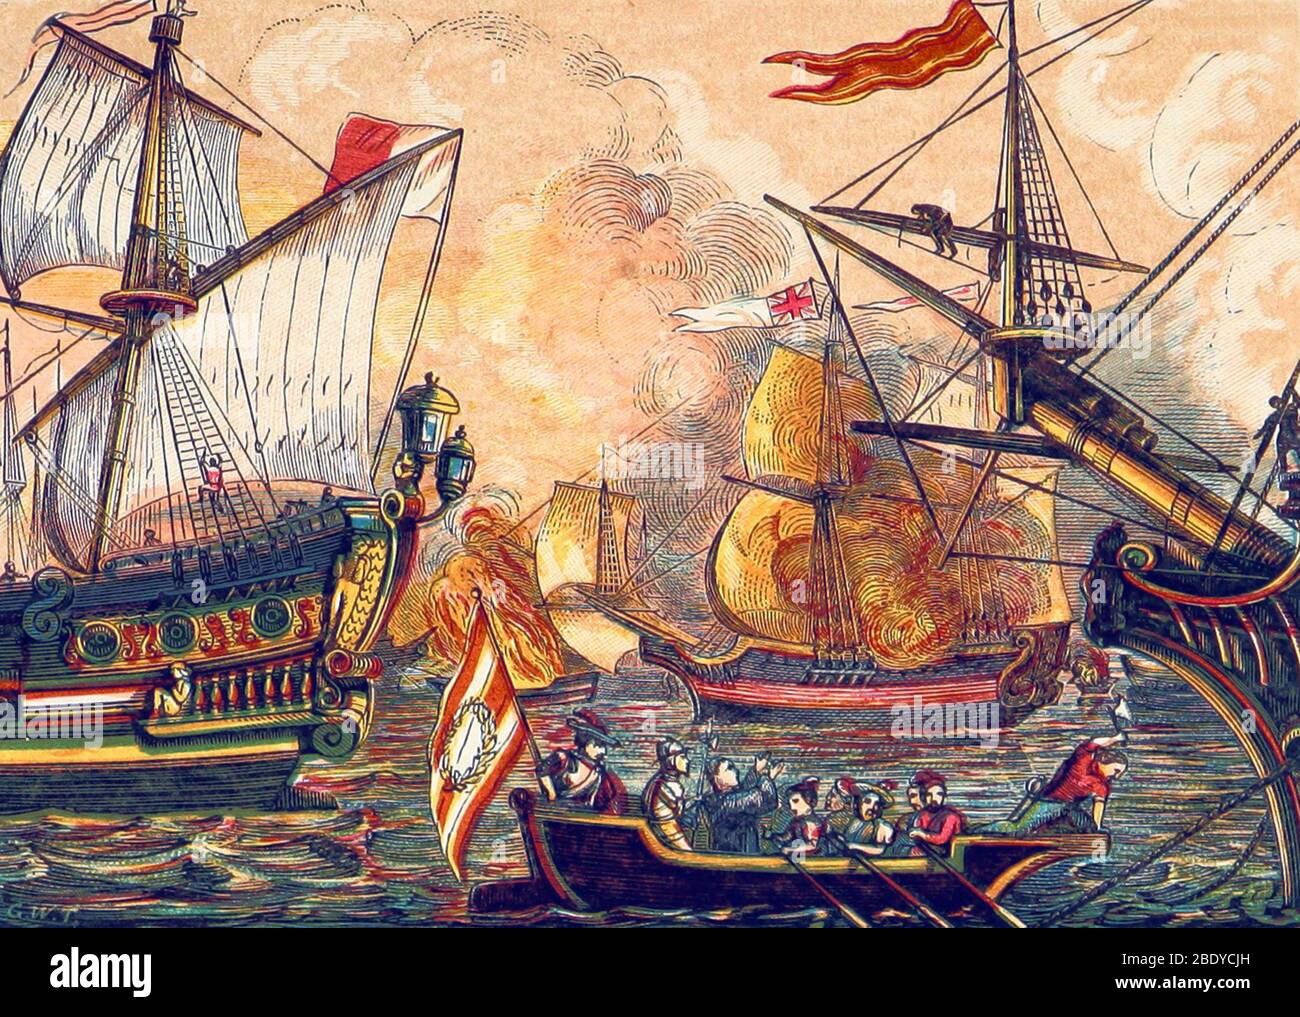 Spanish armada 1588 maritime hi-res stock photography and images - Alamy